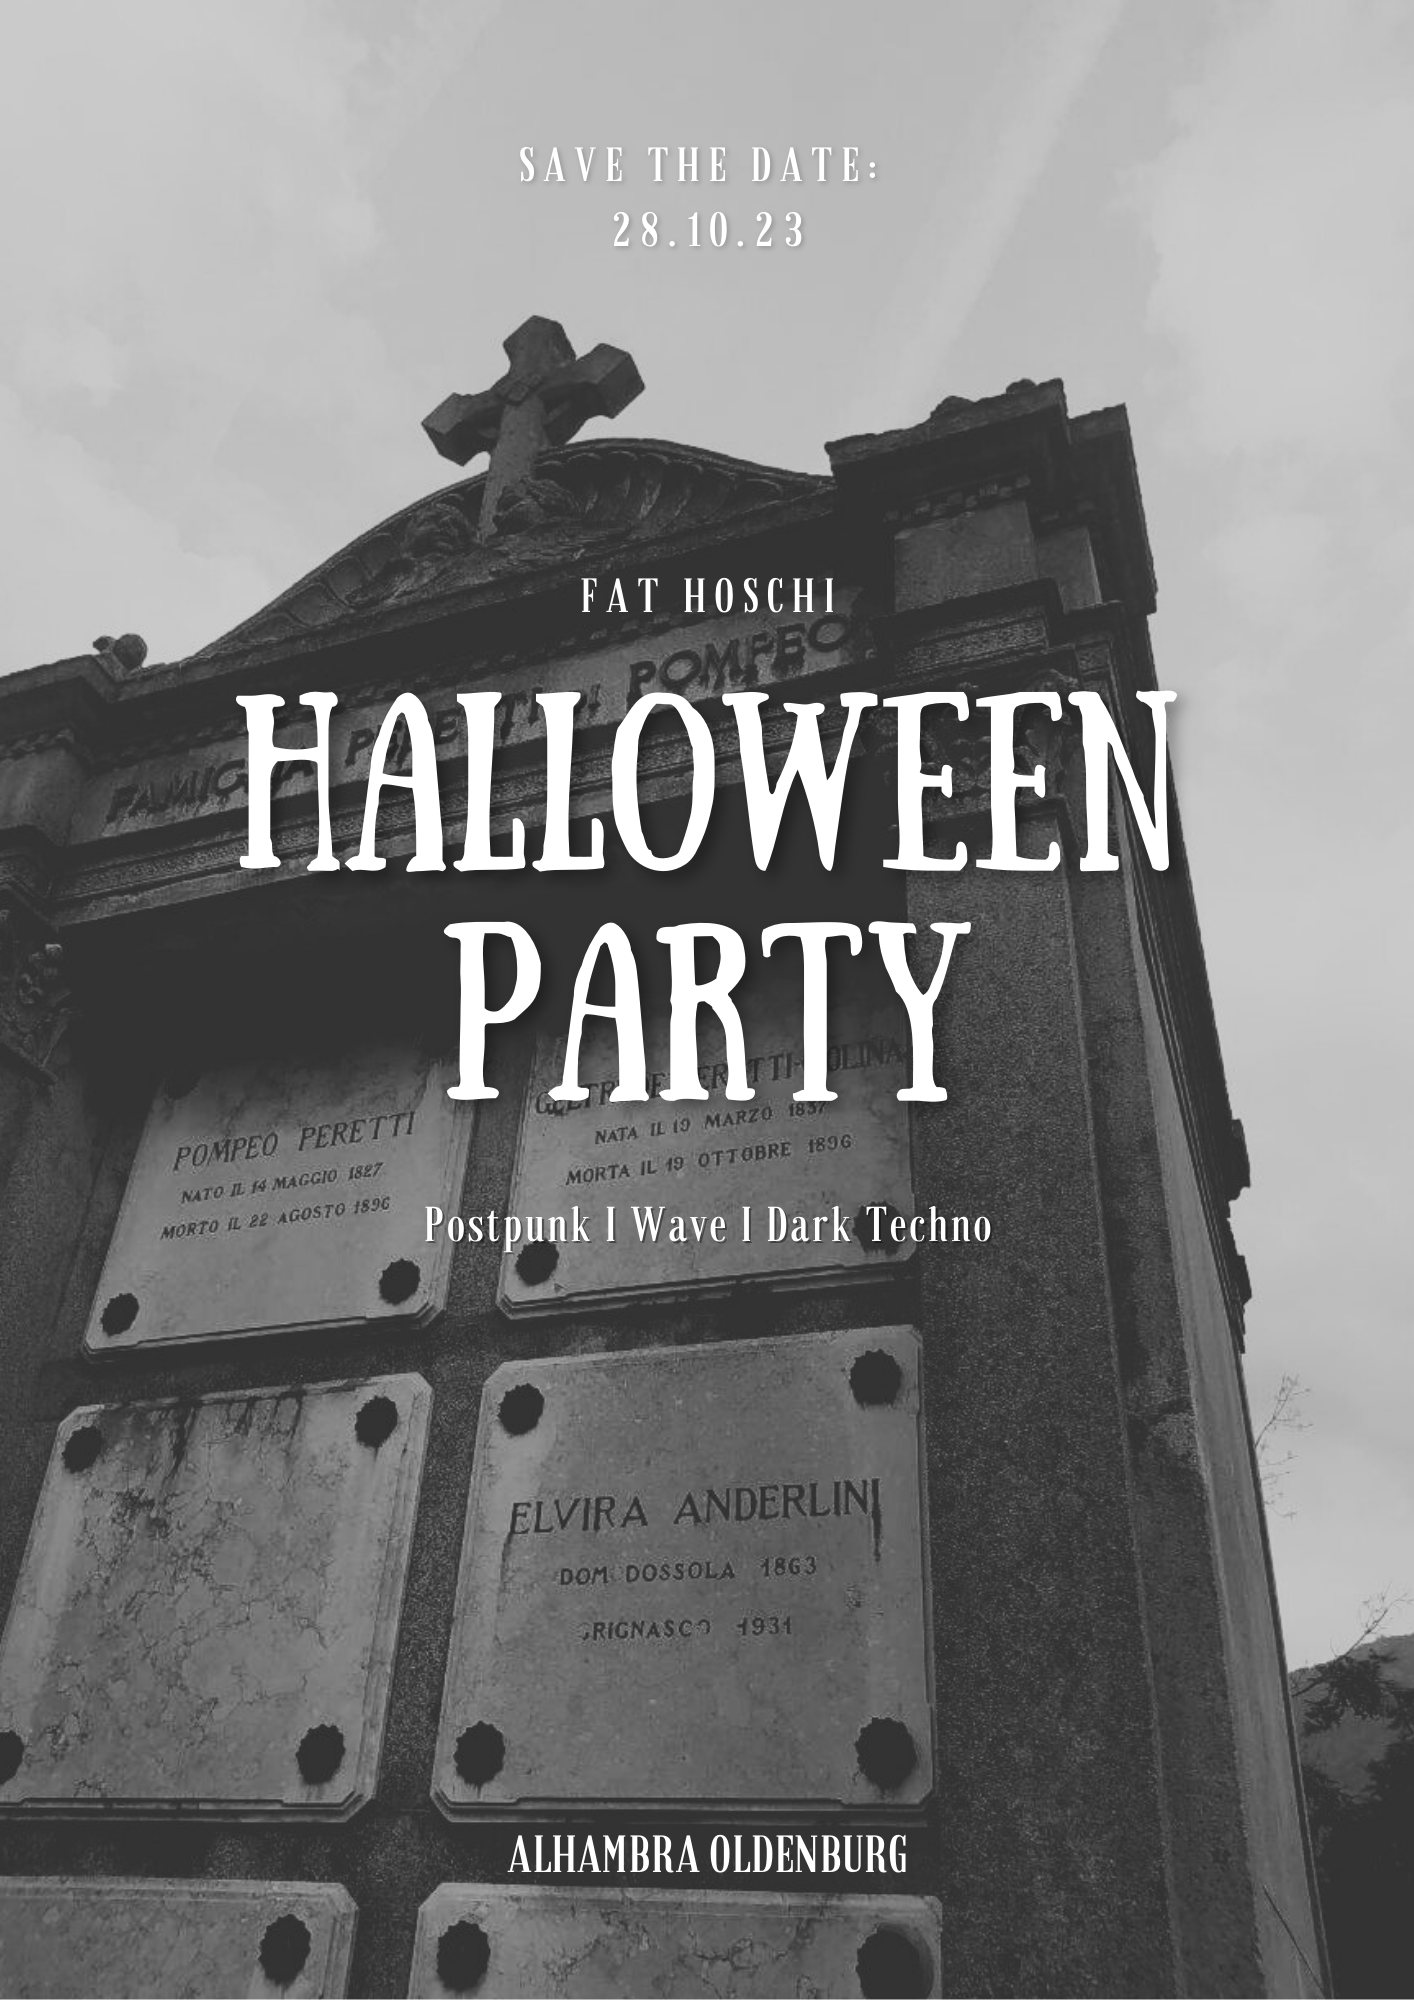 Fat Hoschi Halloween Party